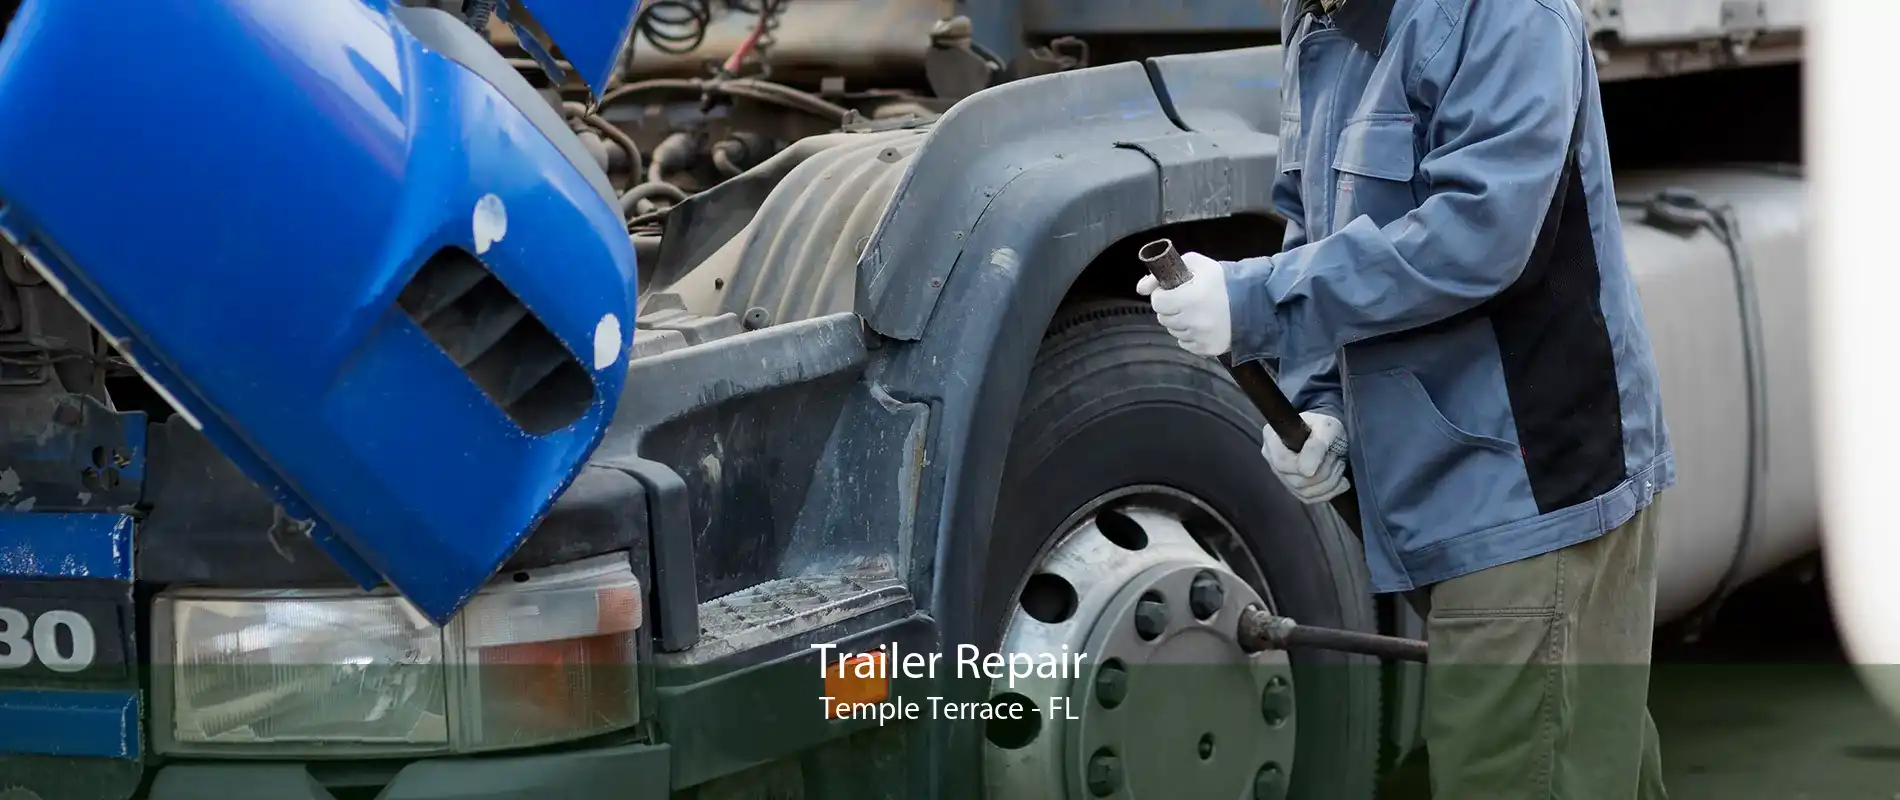 Trailer Repair Temple Terrace - FL